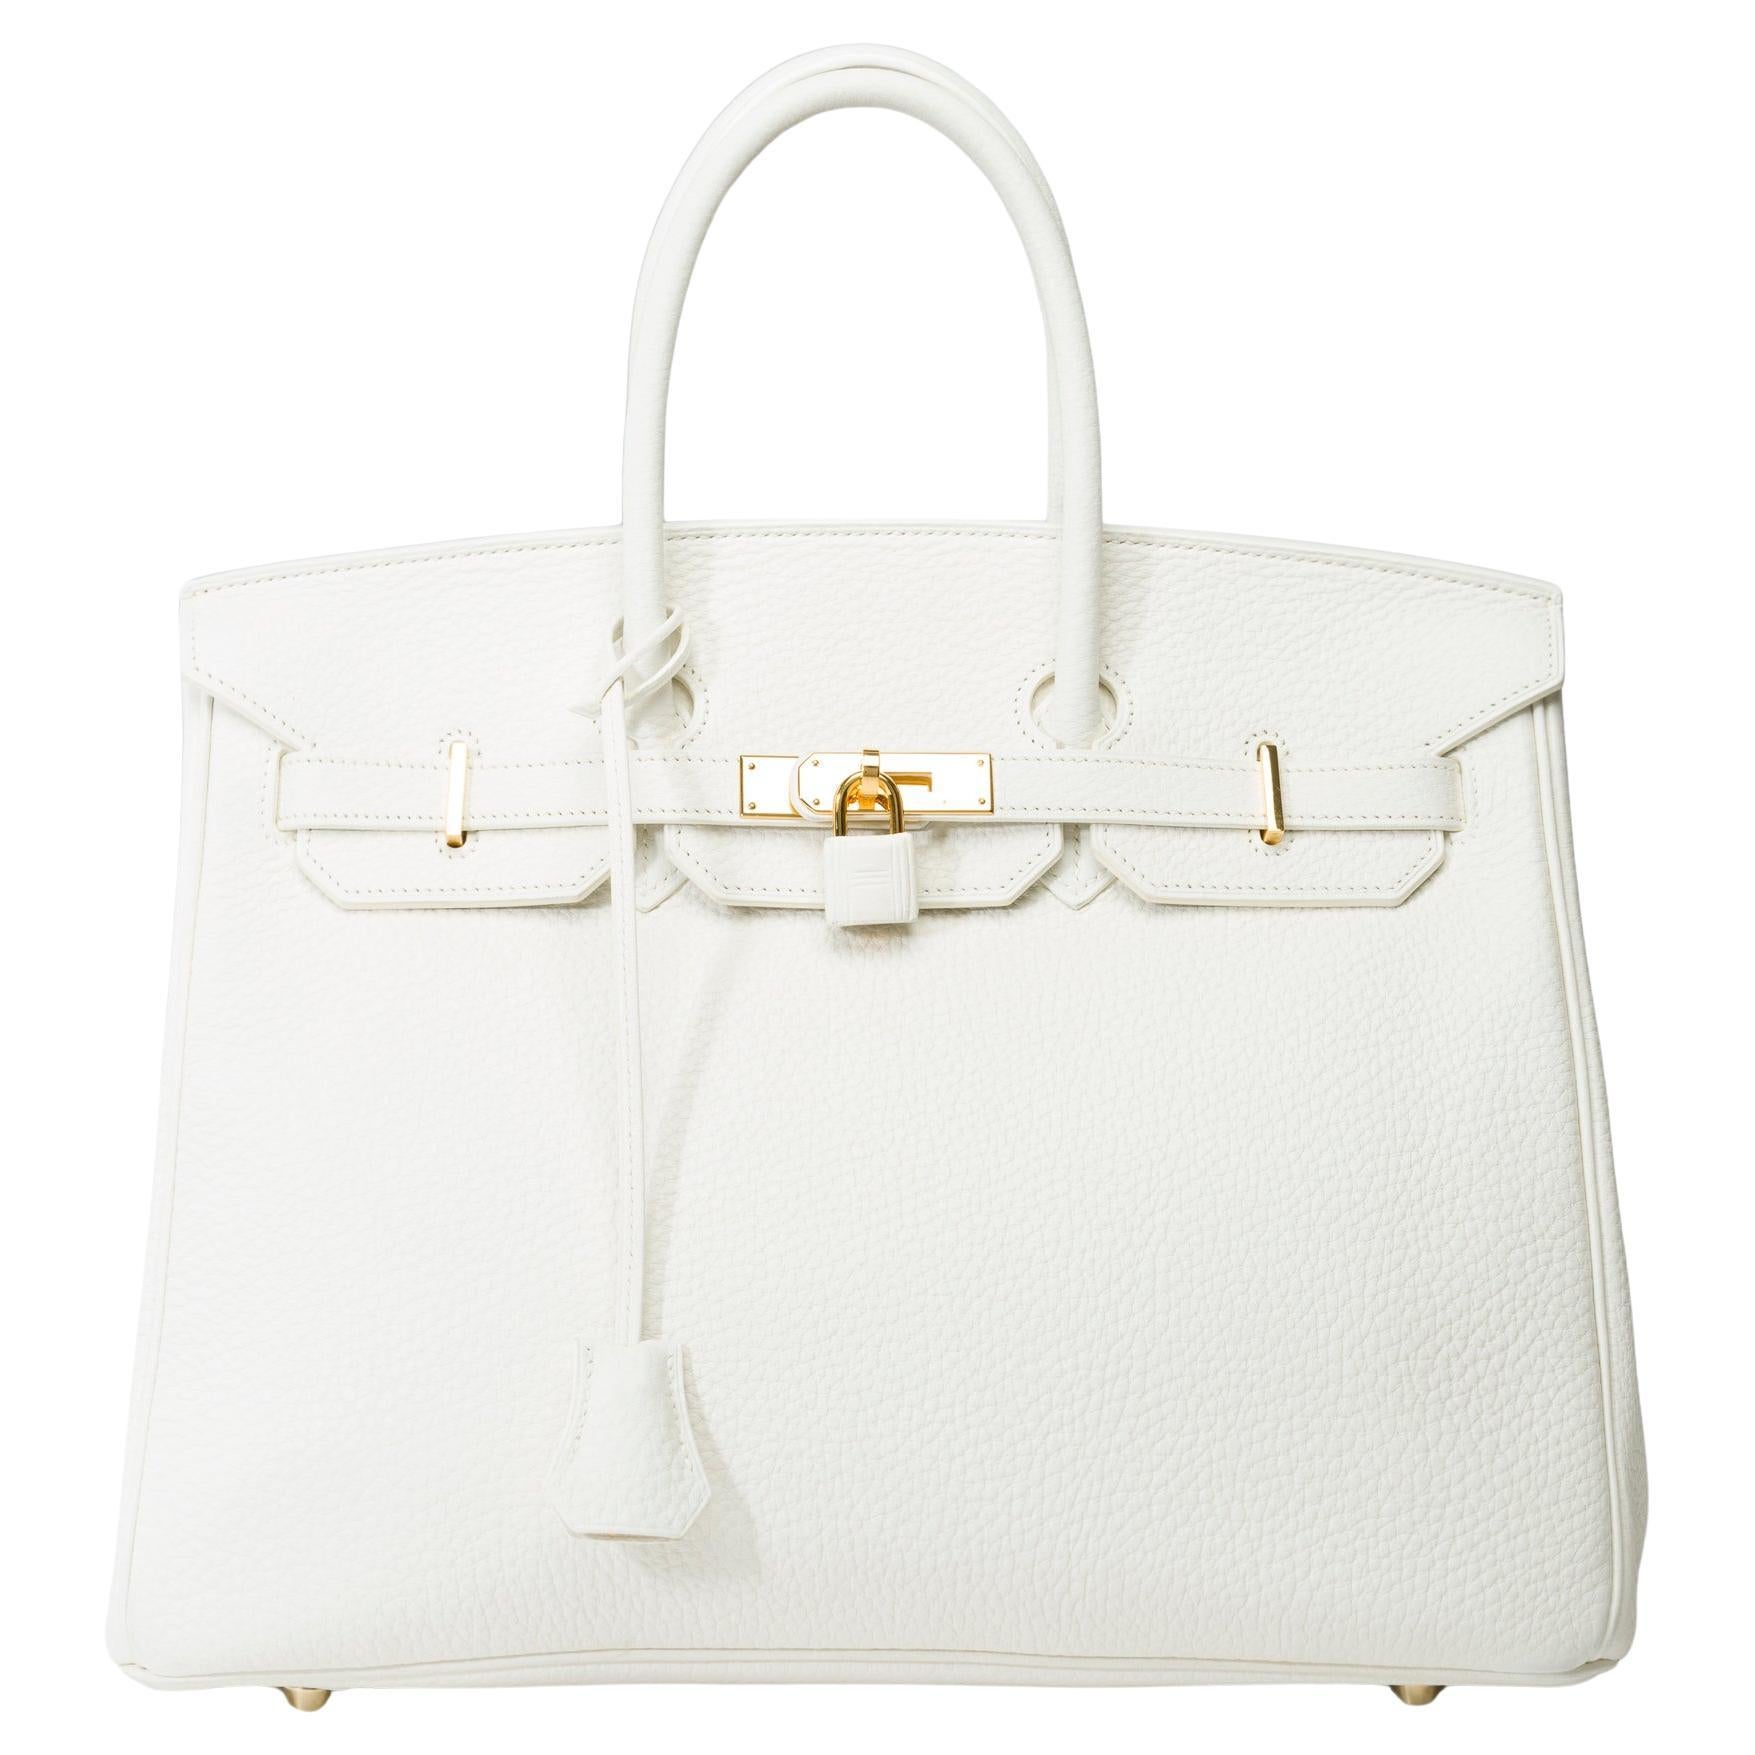 Stunning Hermès Birkin 35 handbag in White Taurillon Clemence leather, GHW